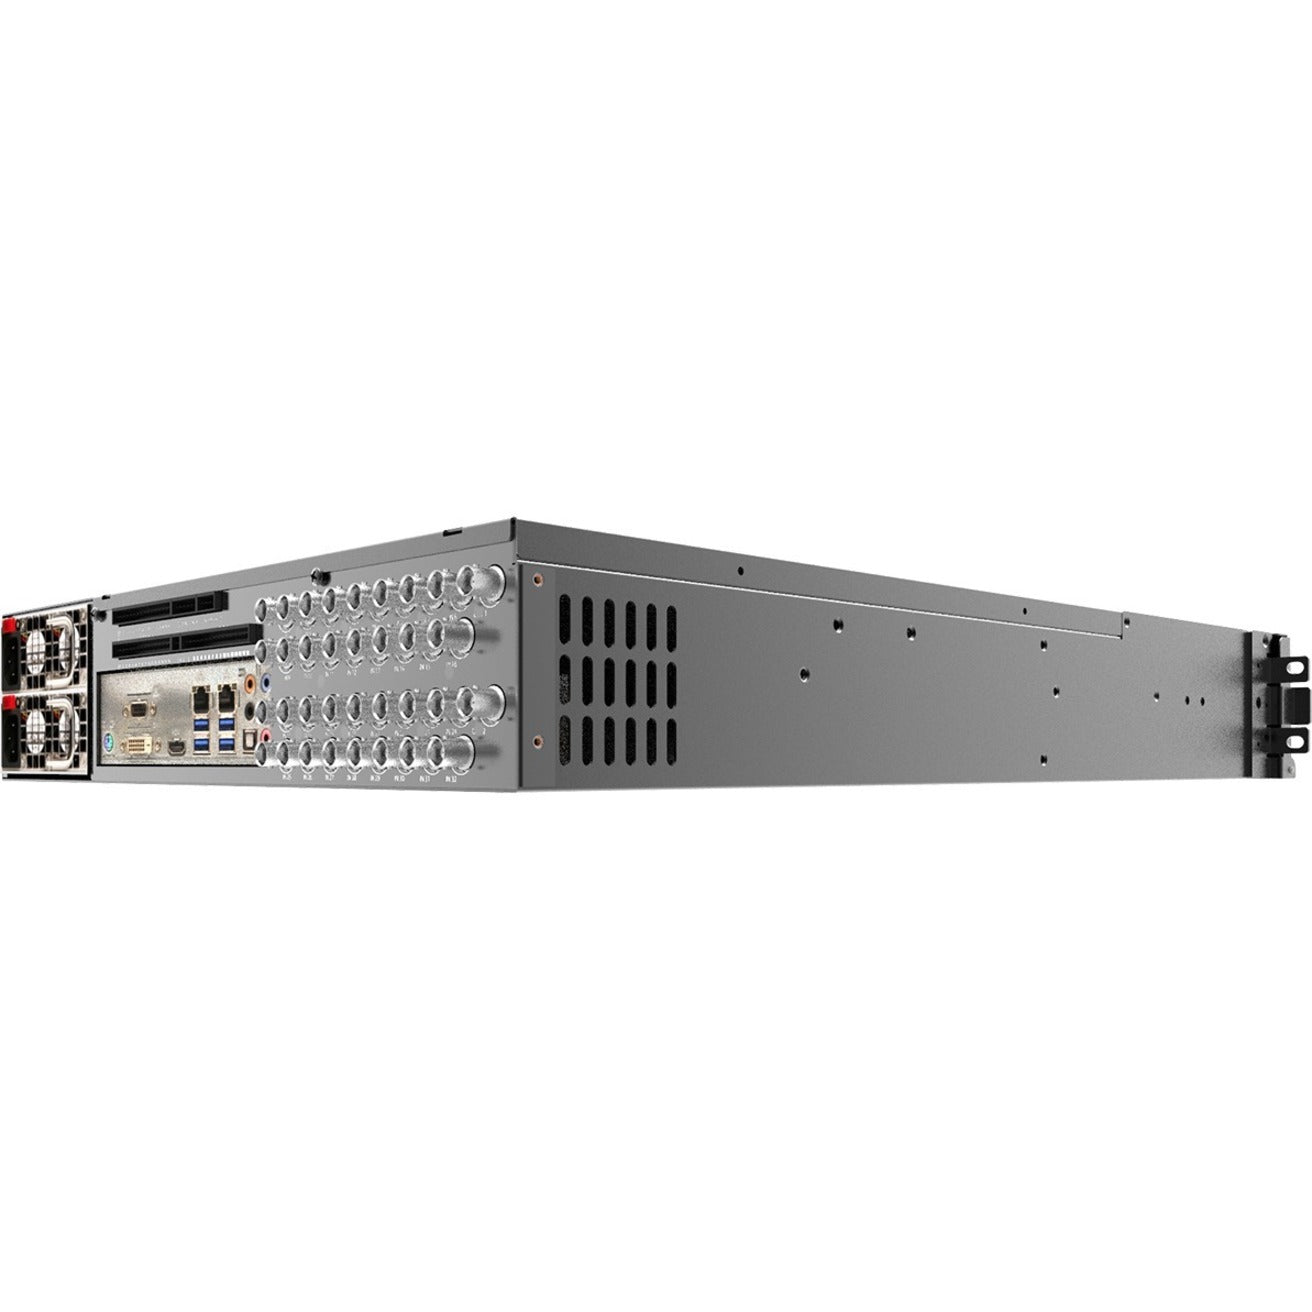 Exacq exacqVision Z Network Surveillance Server - 42 TB HDD